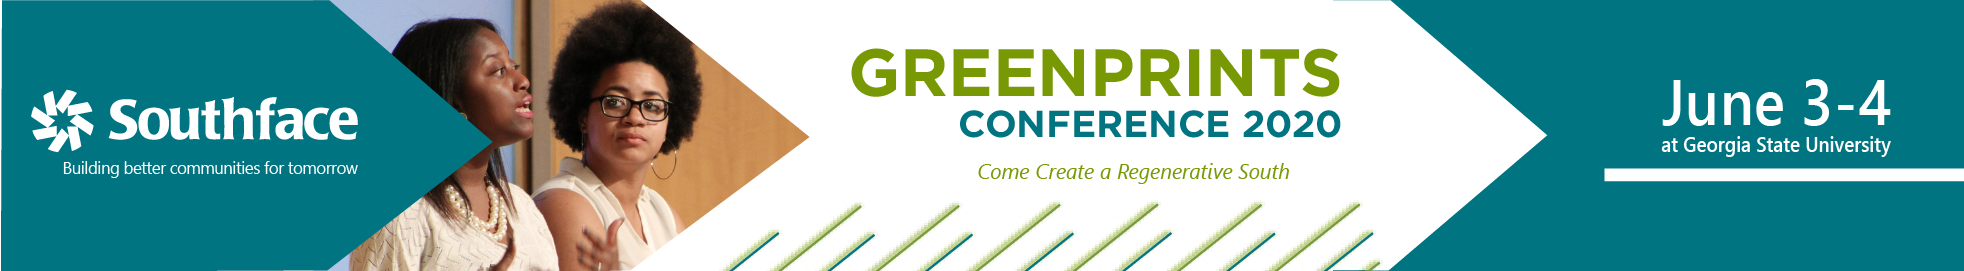 Greenprints Conference June 3-4, 2020